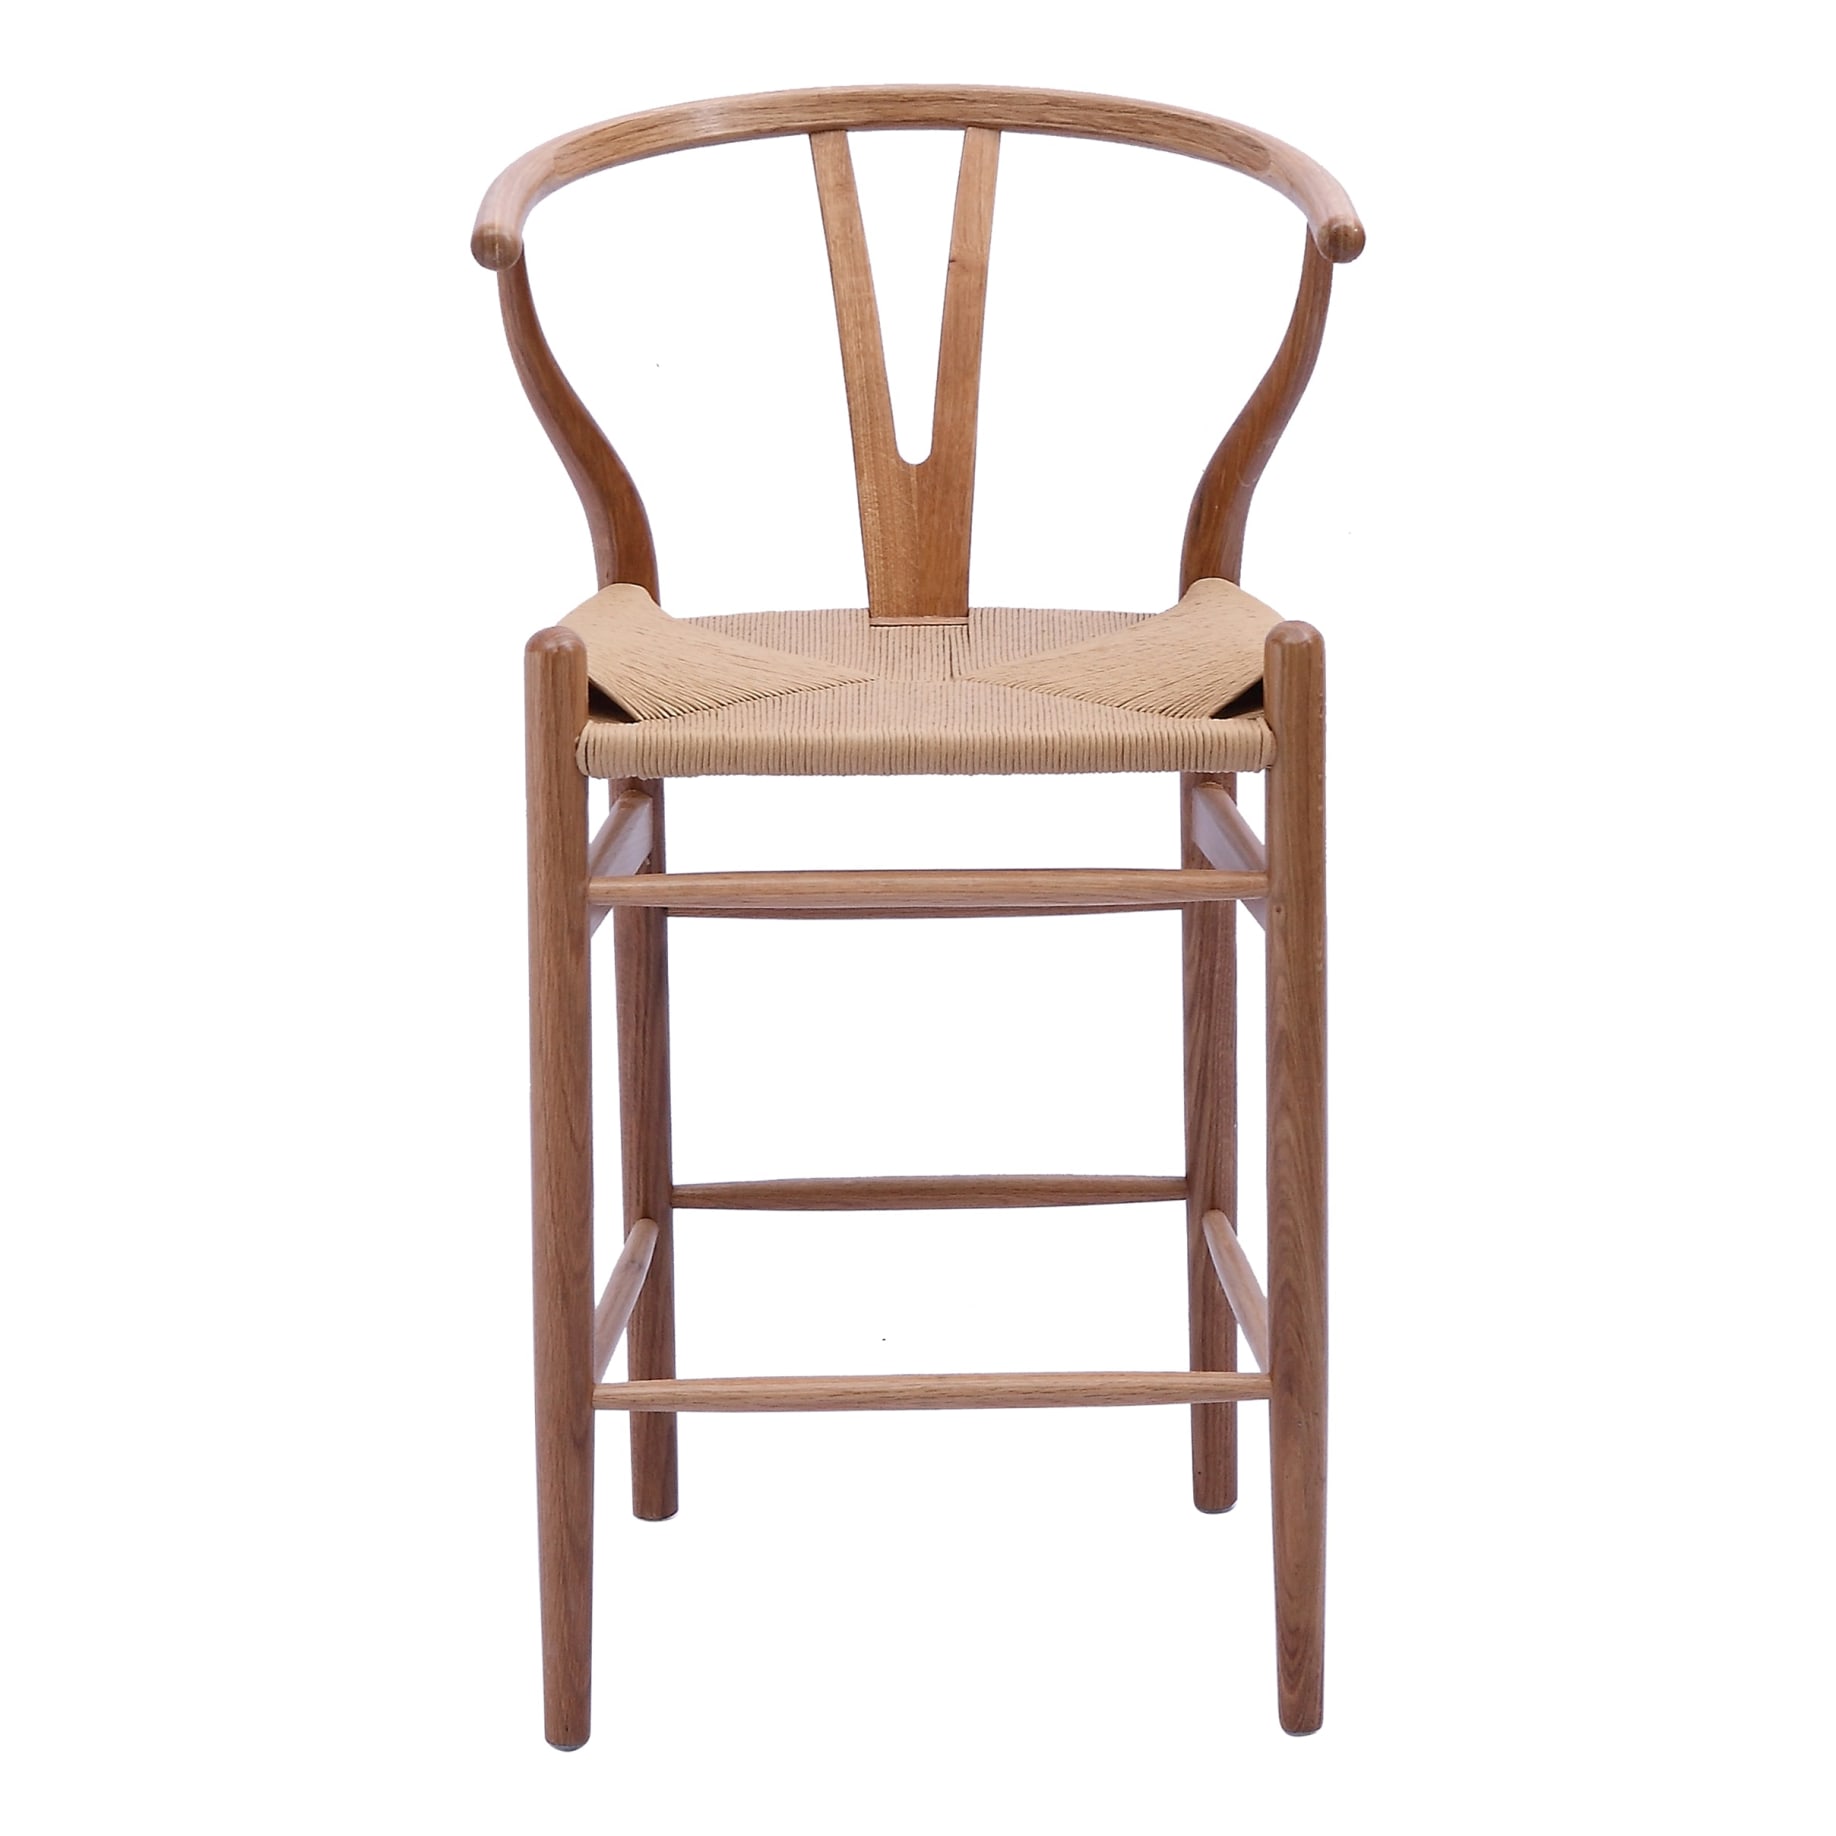 Megs Bar Chair in Oak / Natural Seat